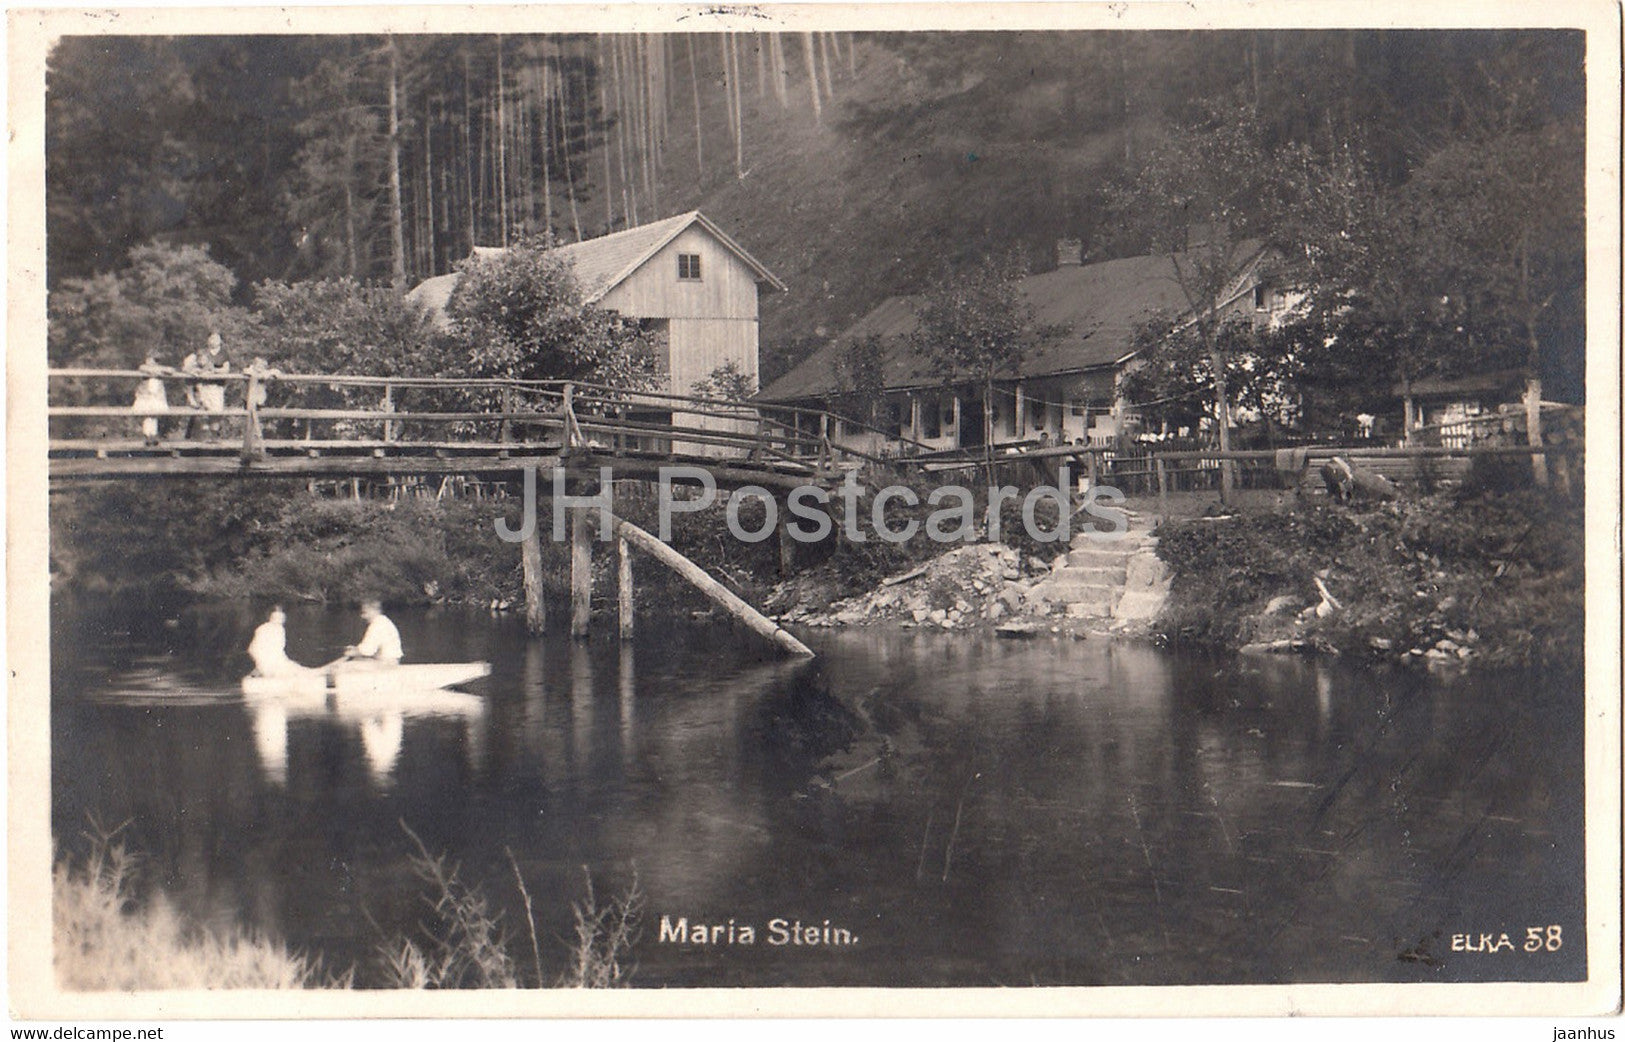 Maria Stein - Elka 58 - old postcard - 1928 - Czechoslovakia - Czech Republic - used - JH Postcards